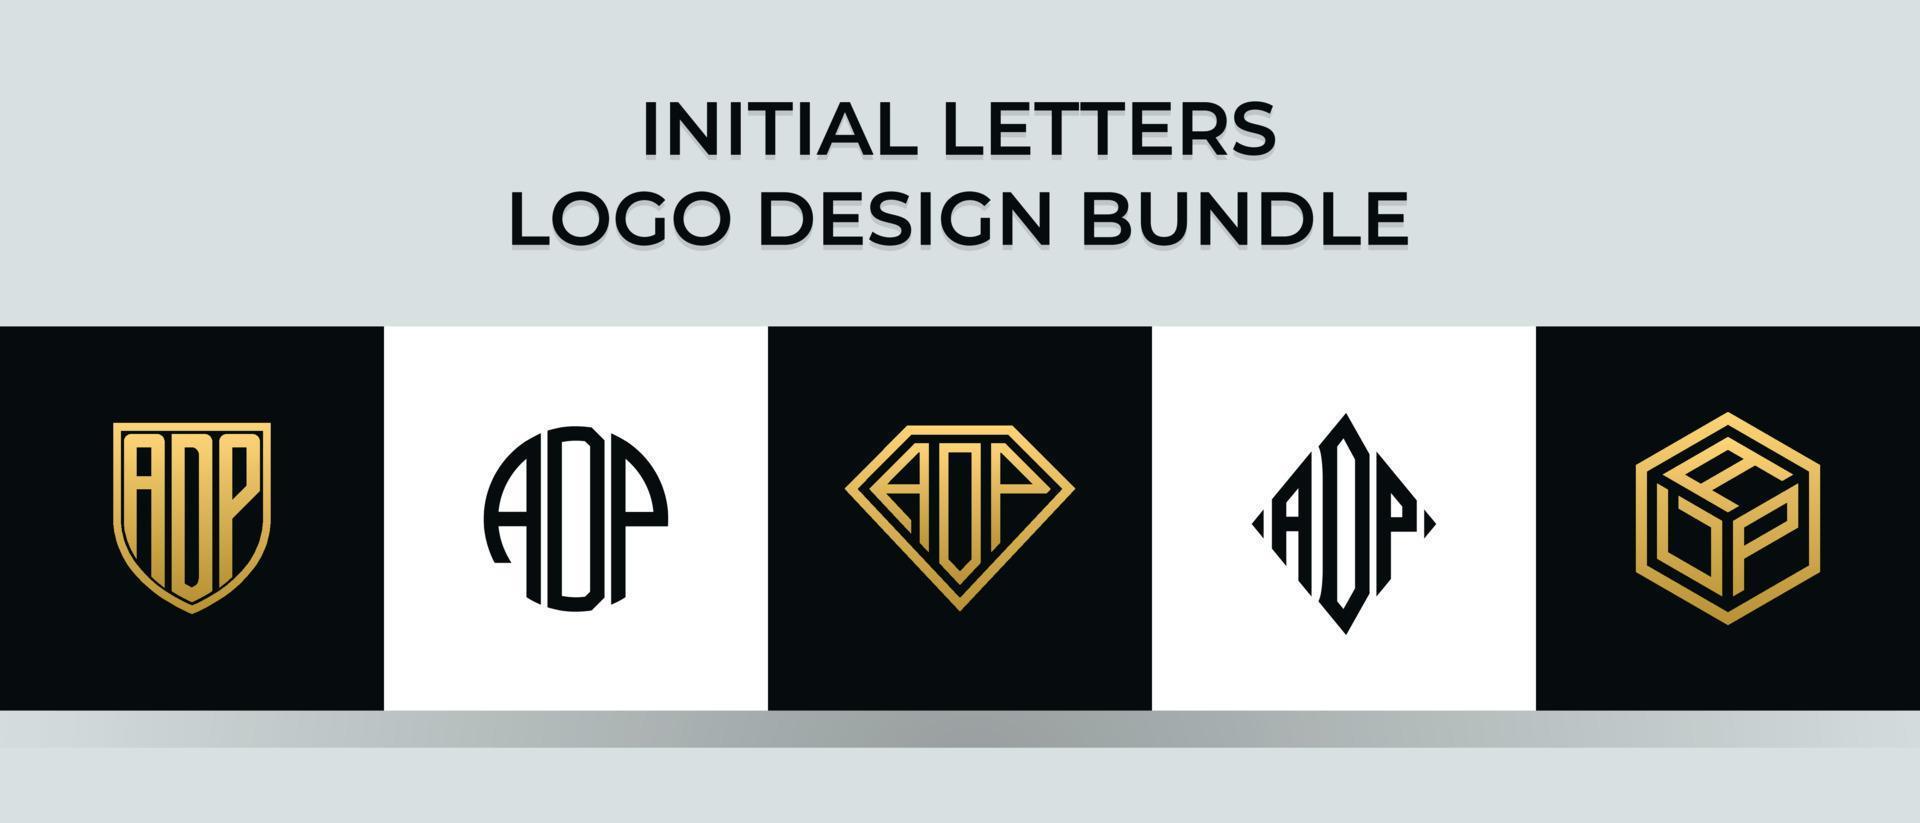 paquet de conceptions de logo adp de lettres initiales vecteur